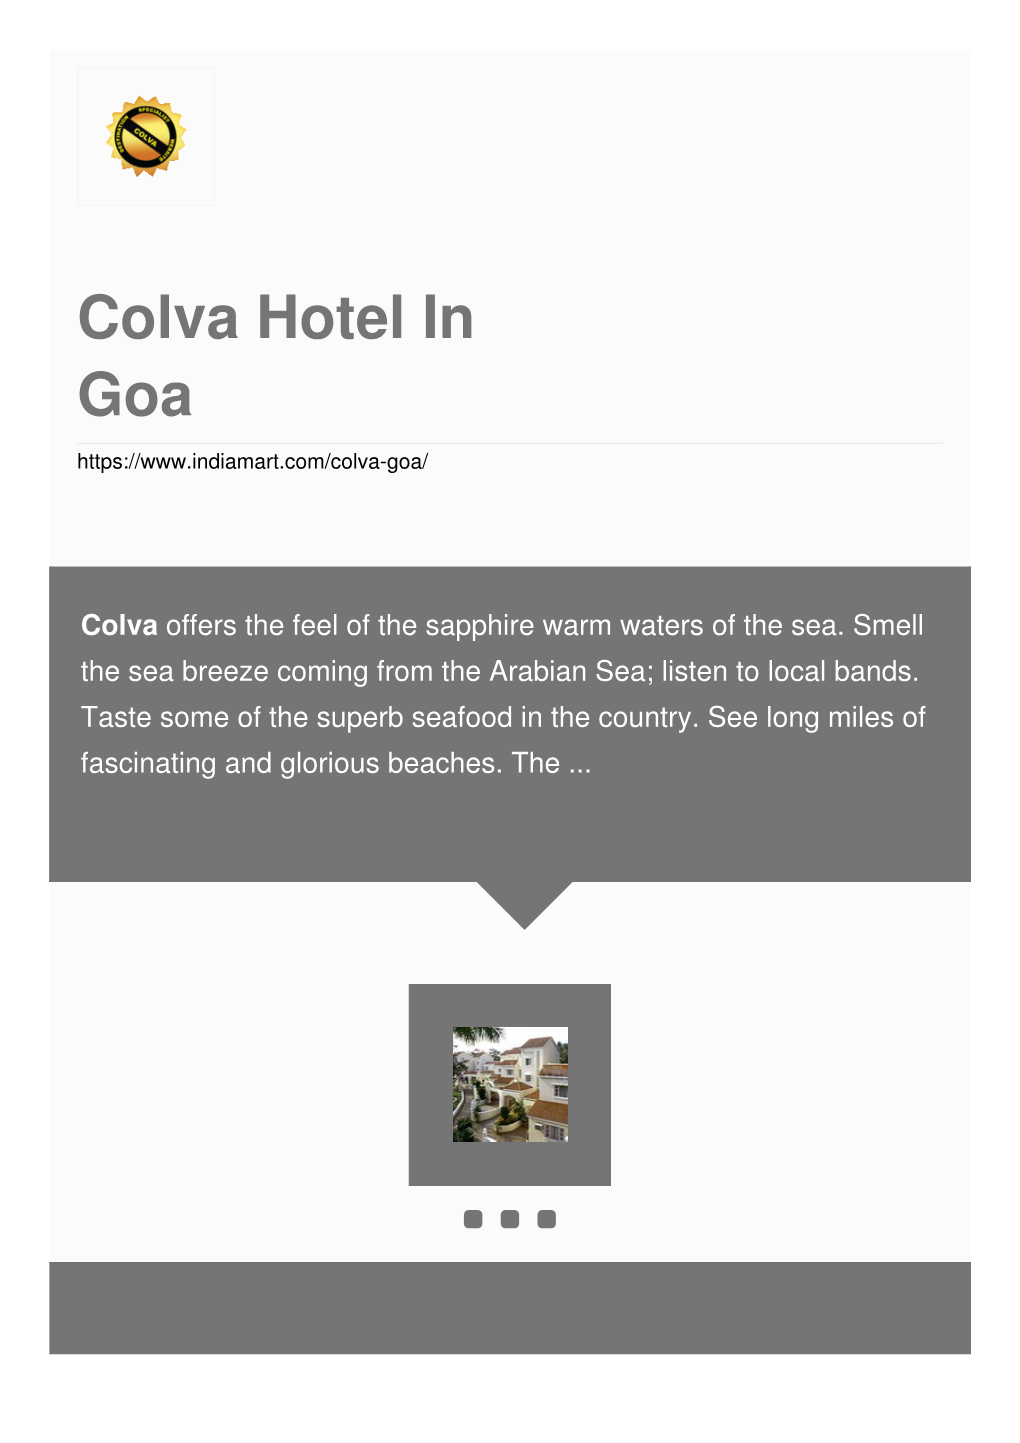 Colva Hotel in Goa